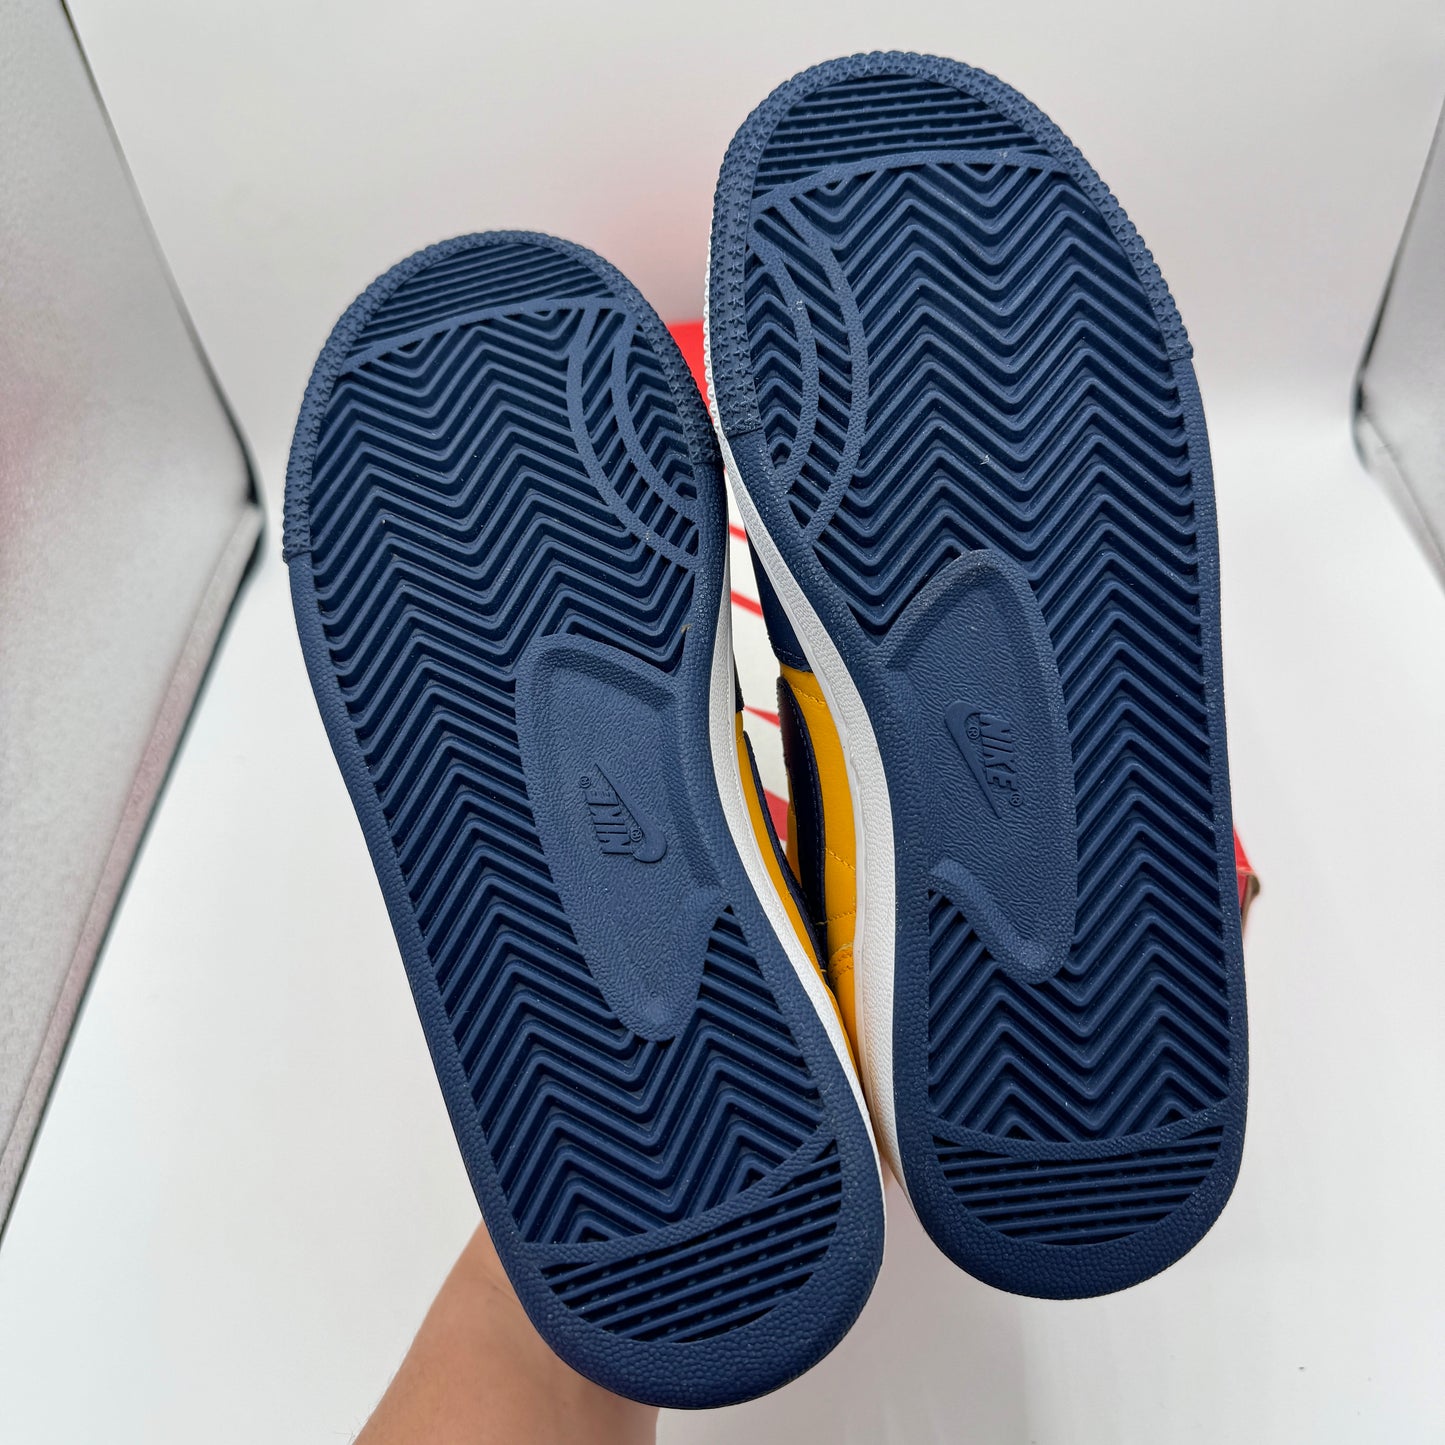 Nike Terminator Low in University Gold / Navy Blue “ Michigan “ Unisex Shoes